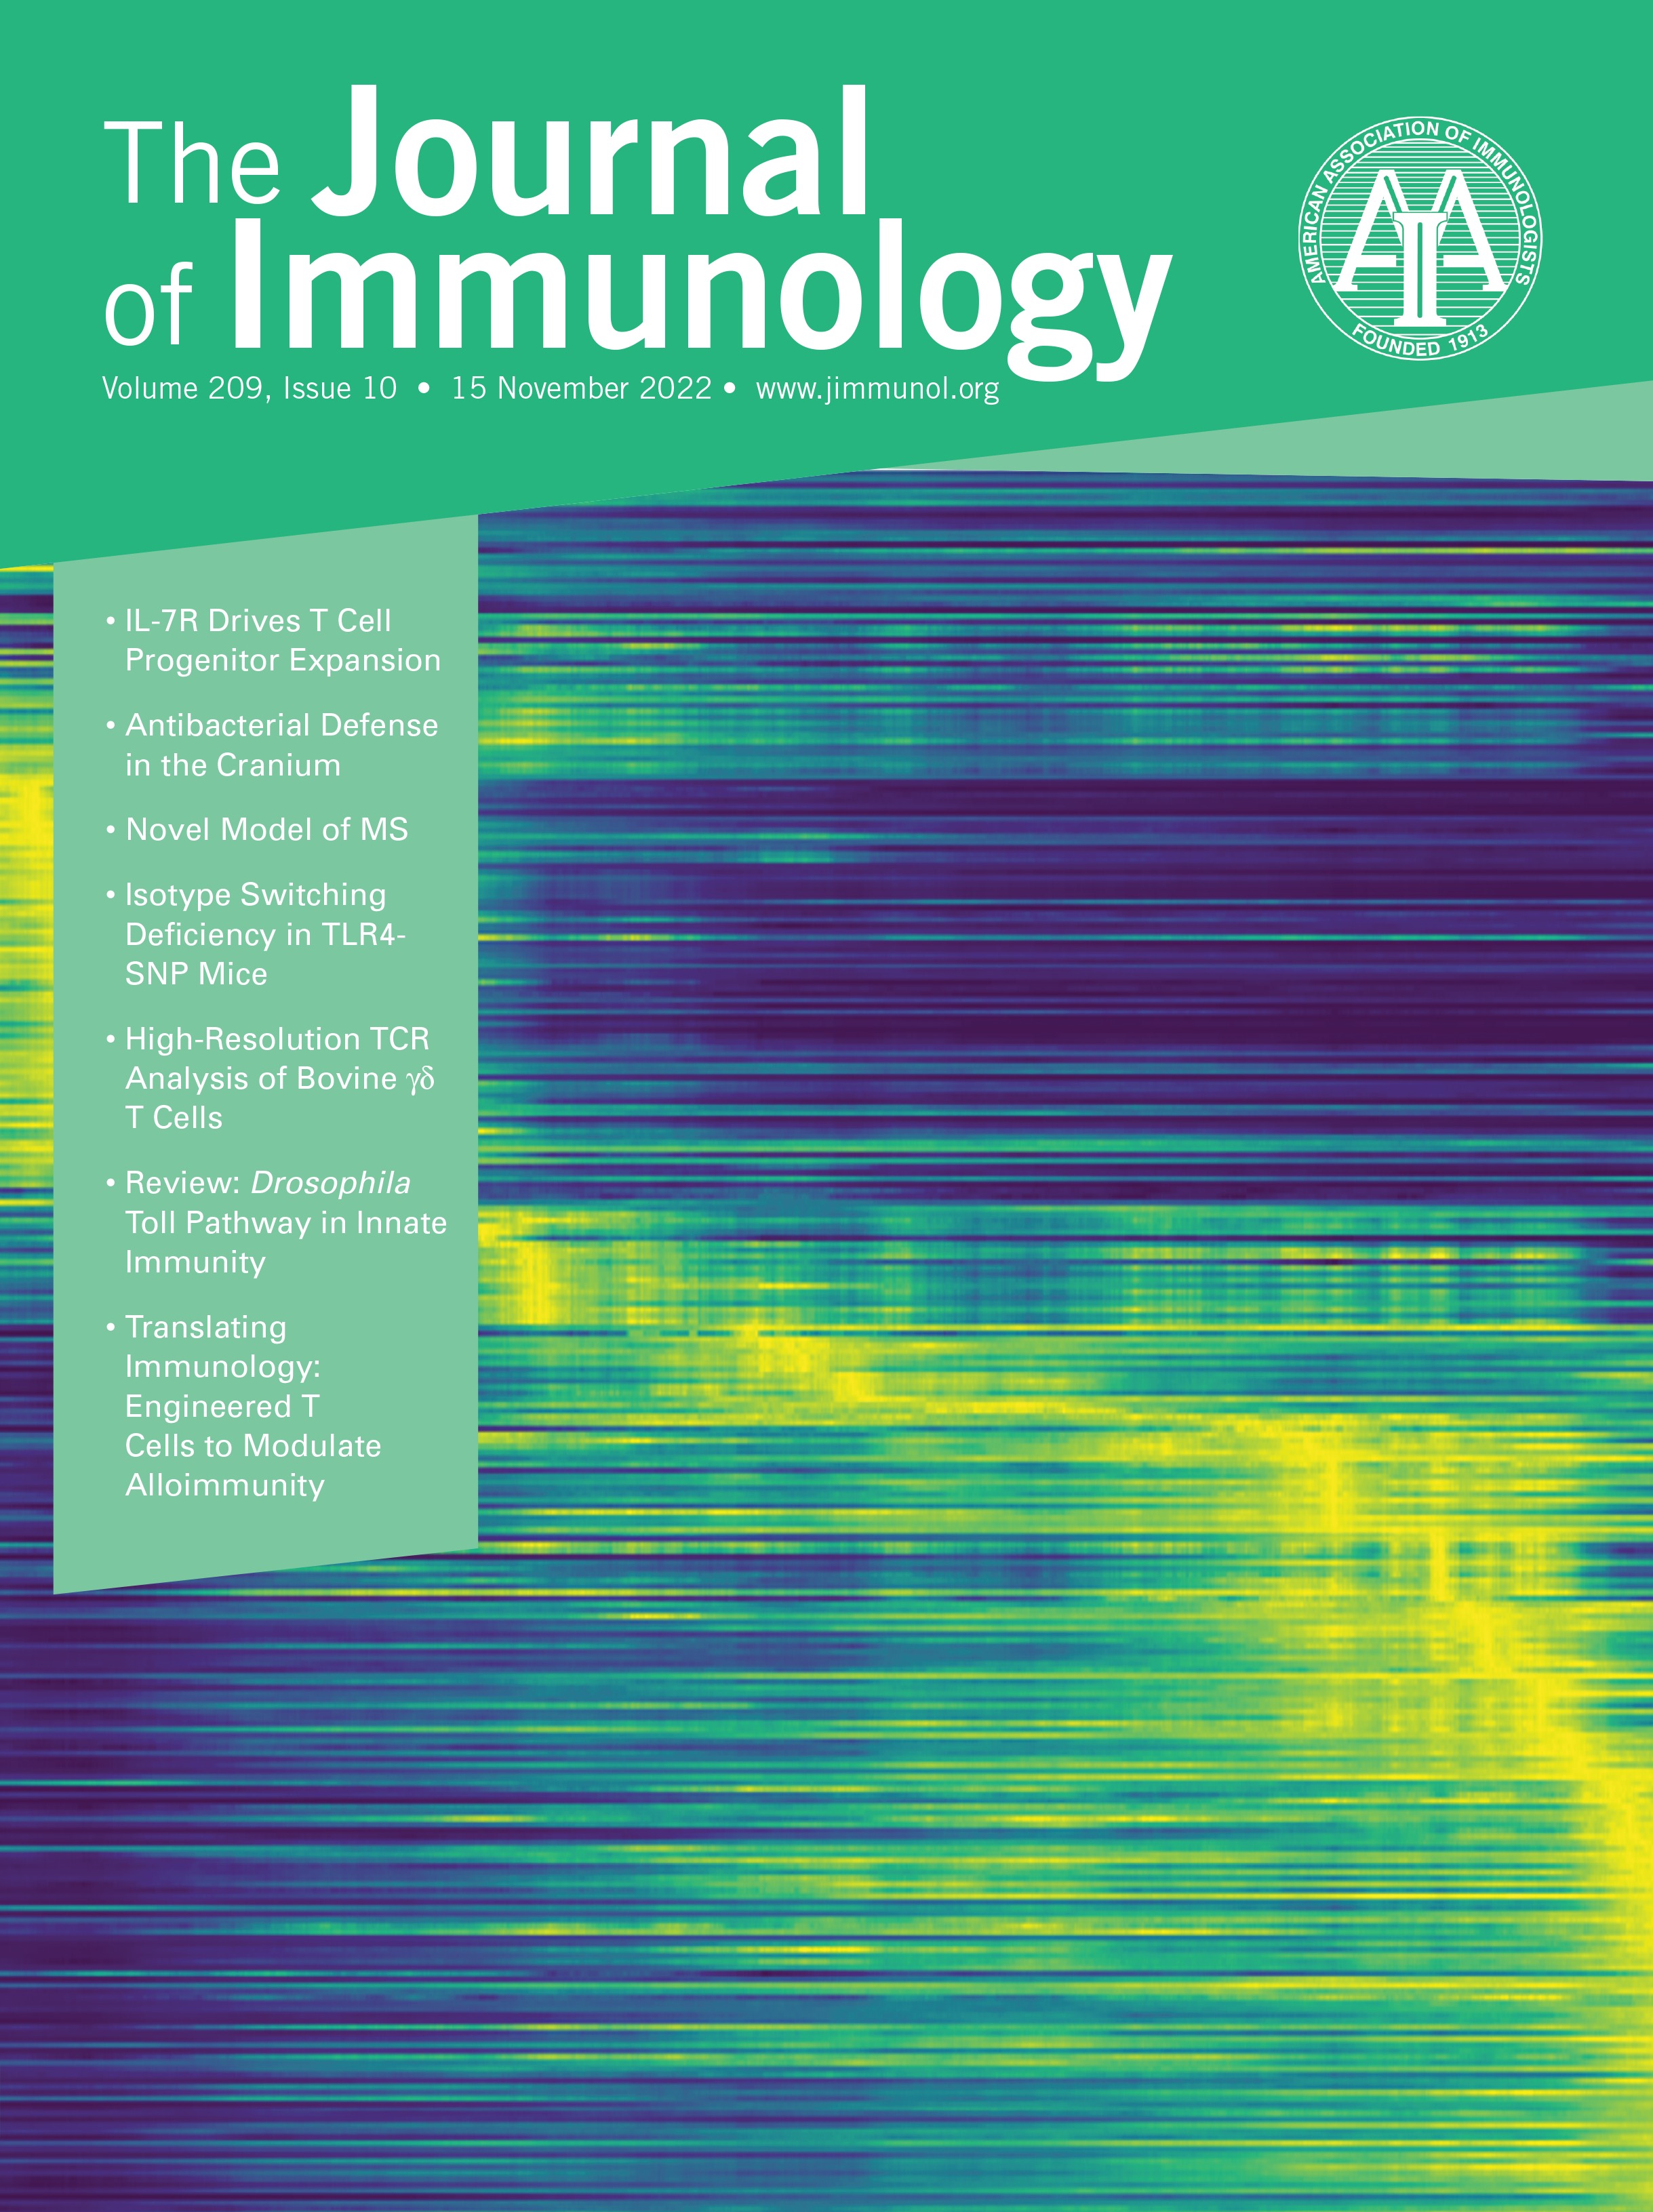 Monocyte/Macrophage Heterogeneity during Skin Wound Healing in Mice [INNATE IMMUNITY AND INFLAMMATION]